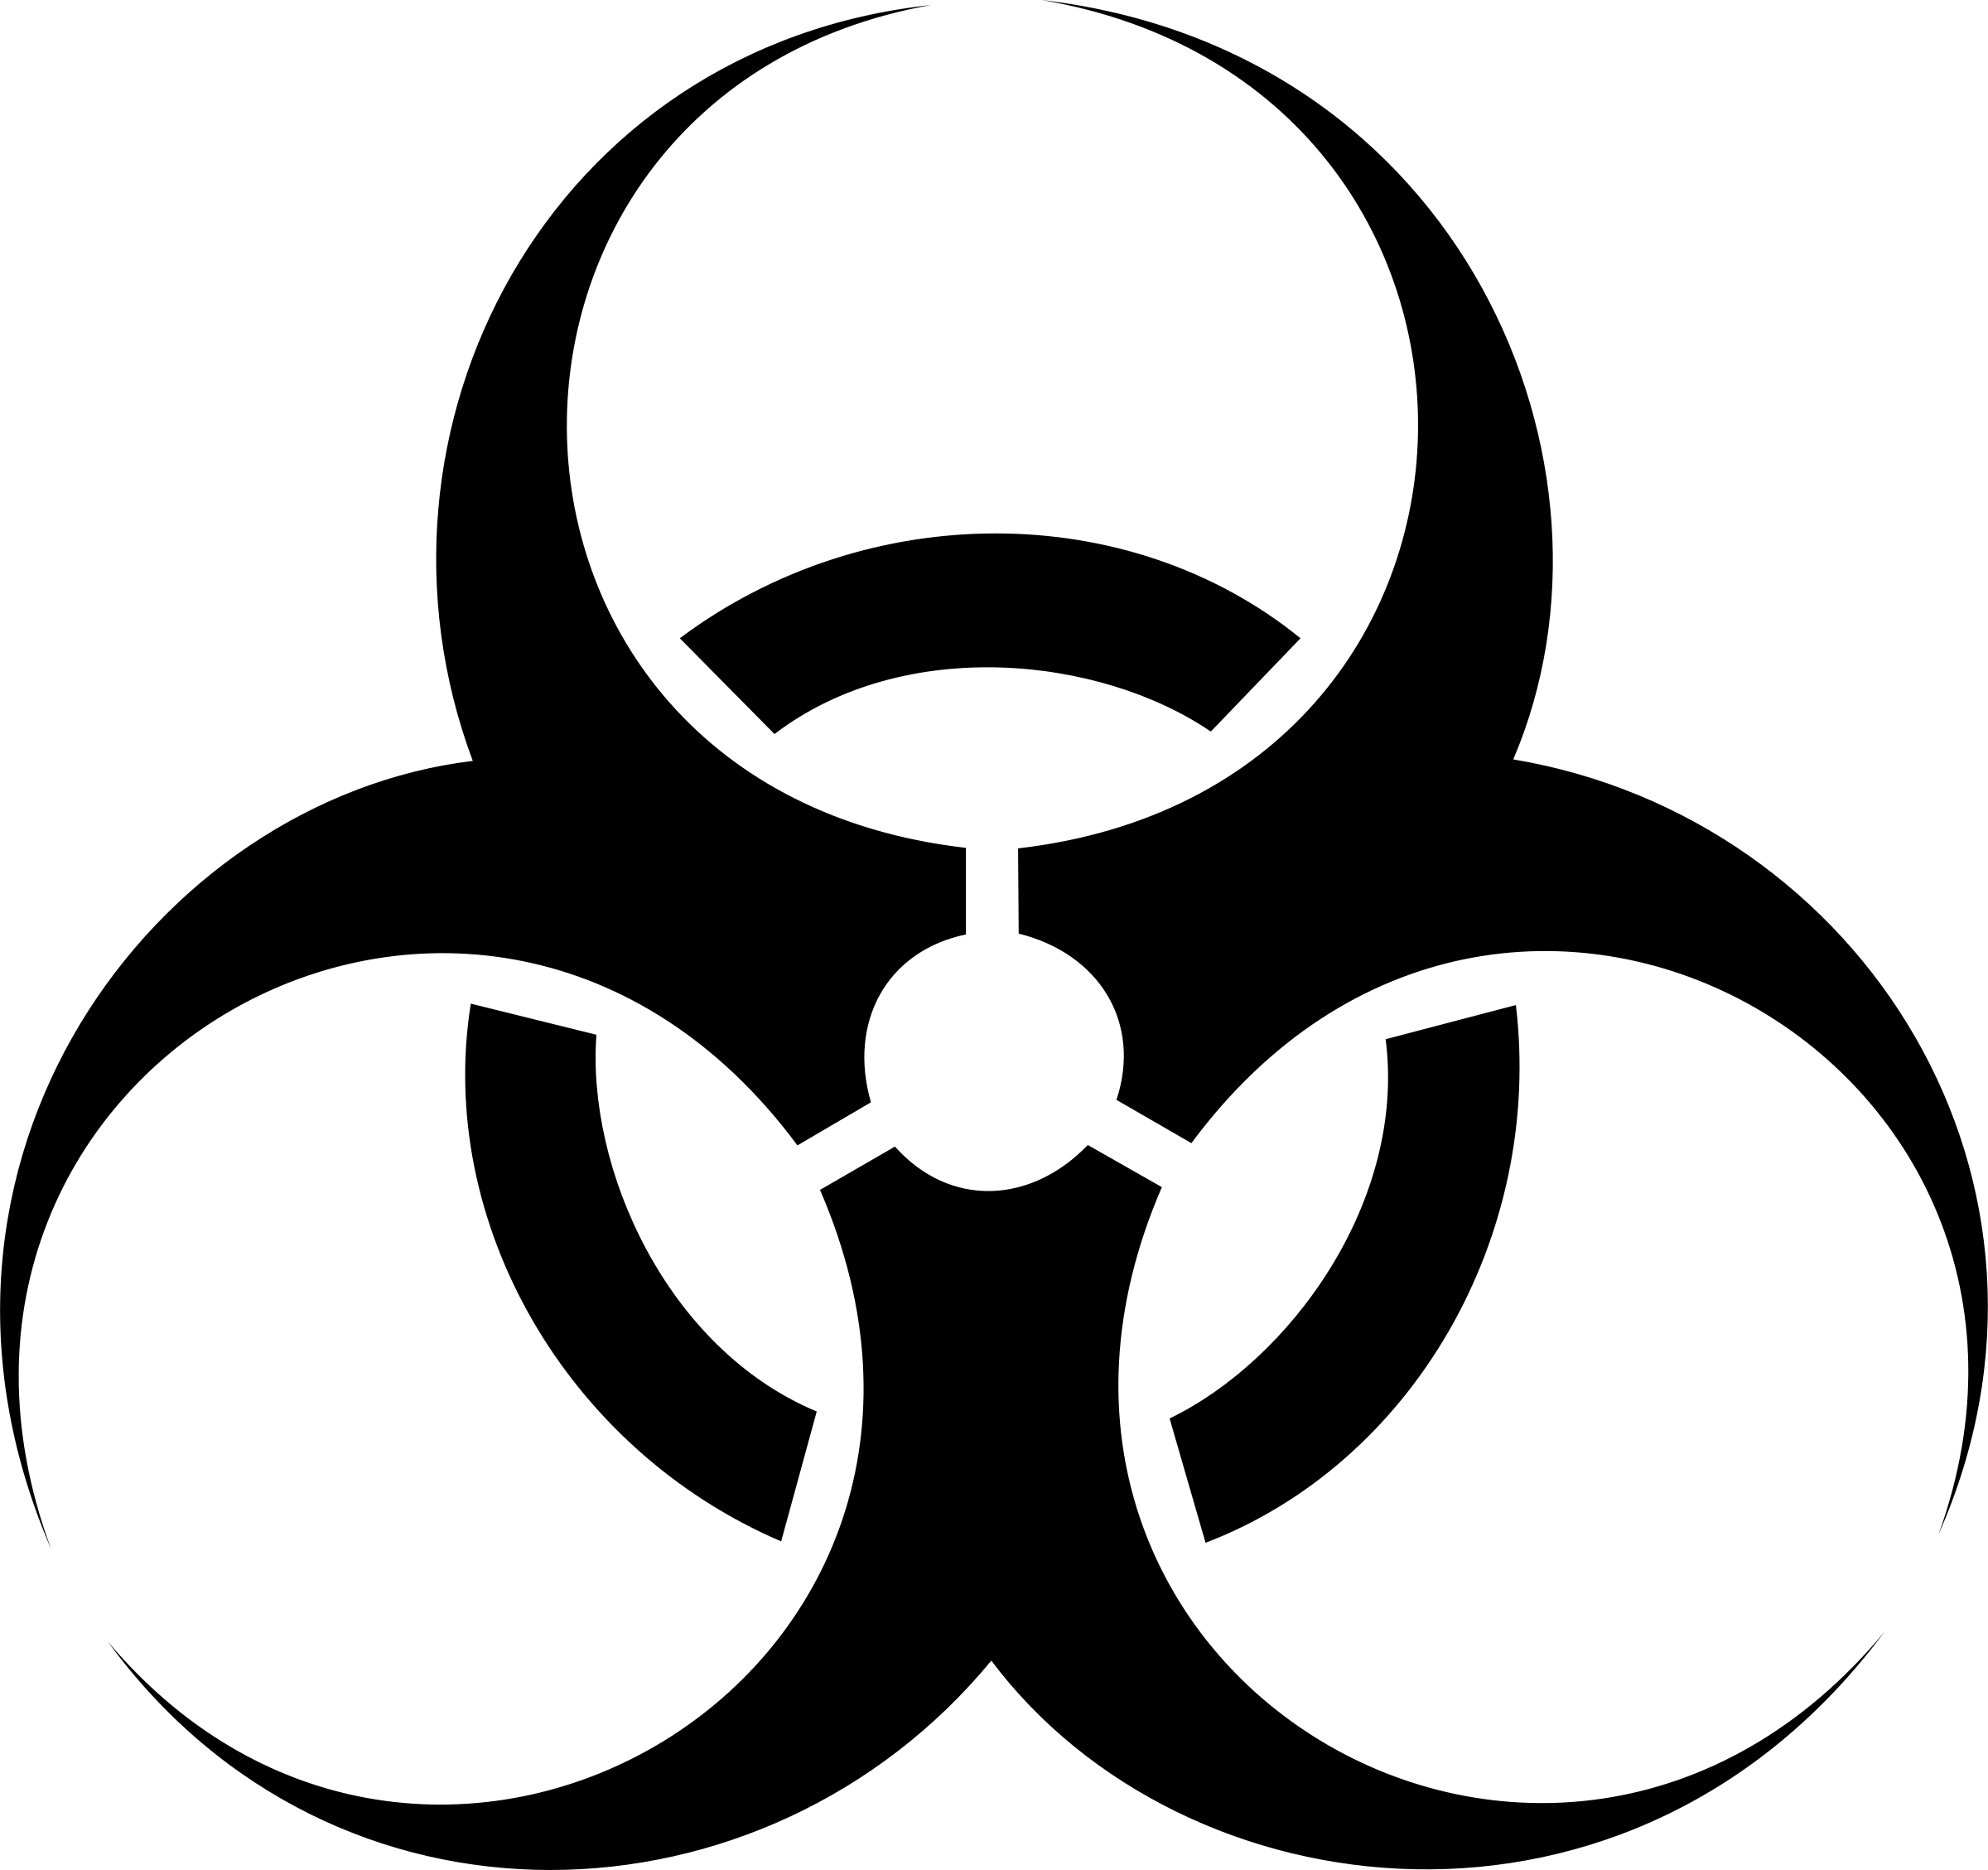 Biohazard Logo - Free Biohazard Symbol, Download Free Clip Art, Free Clip Art on ...